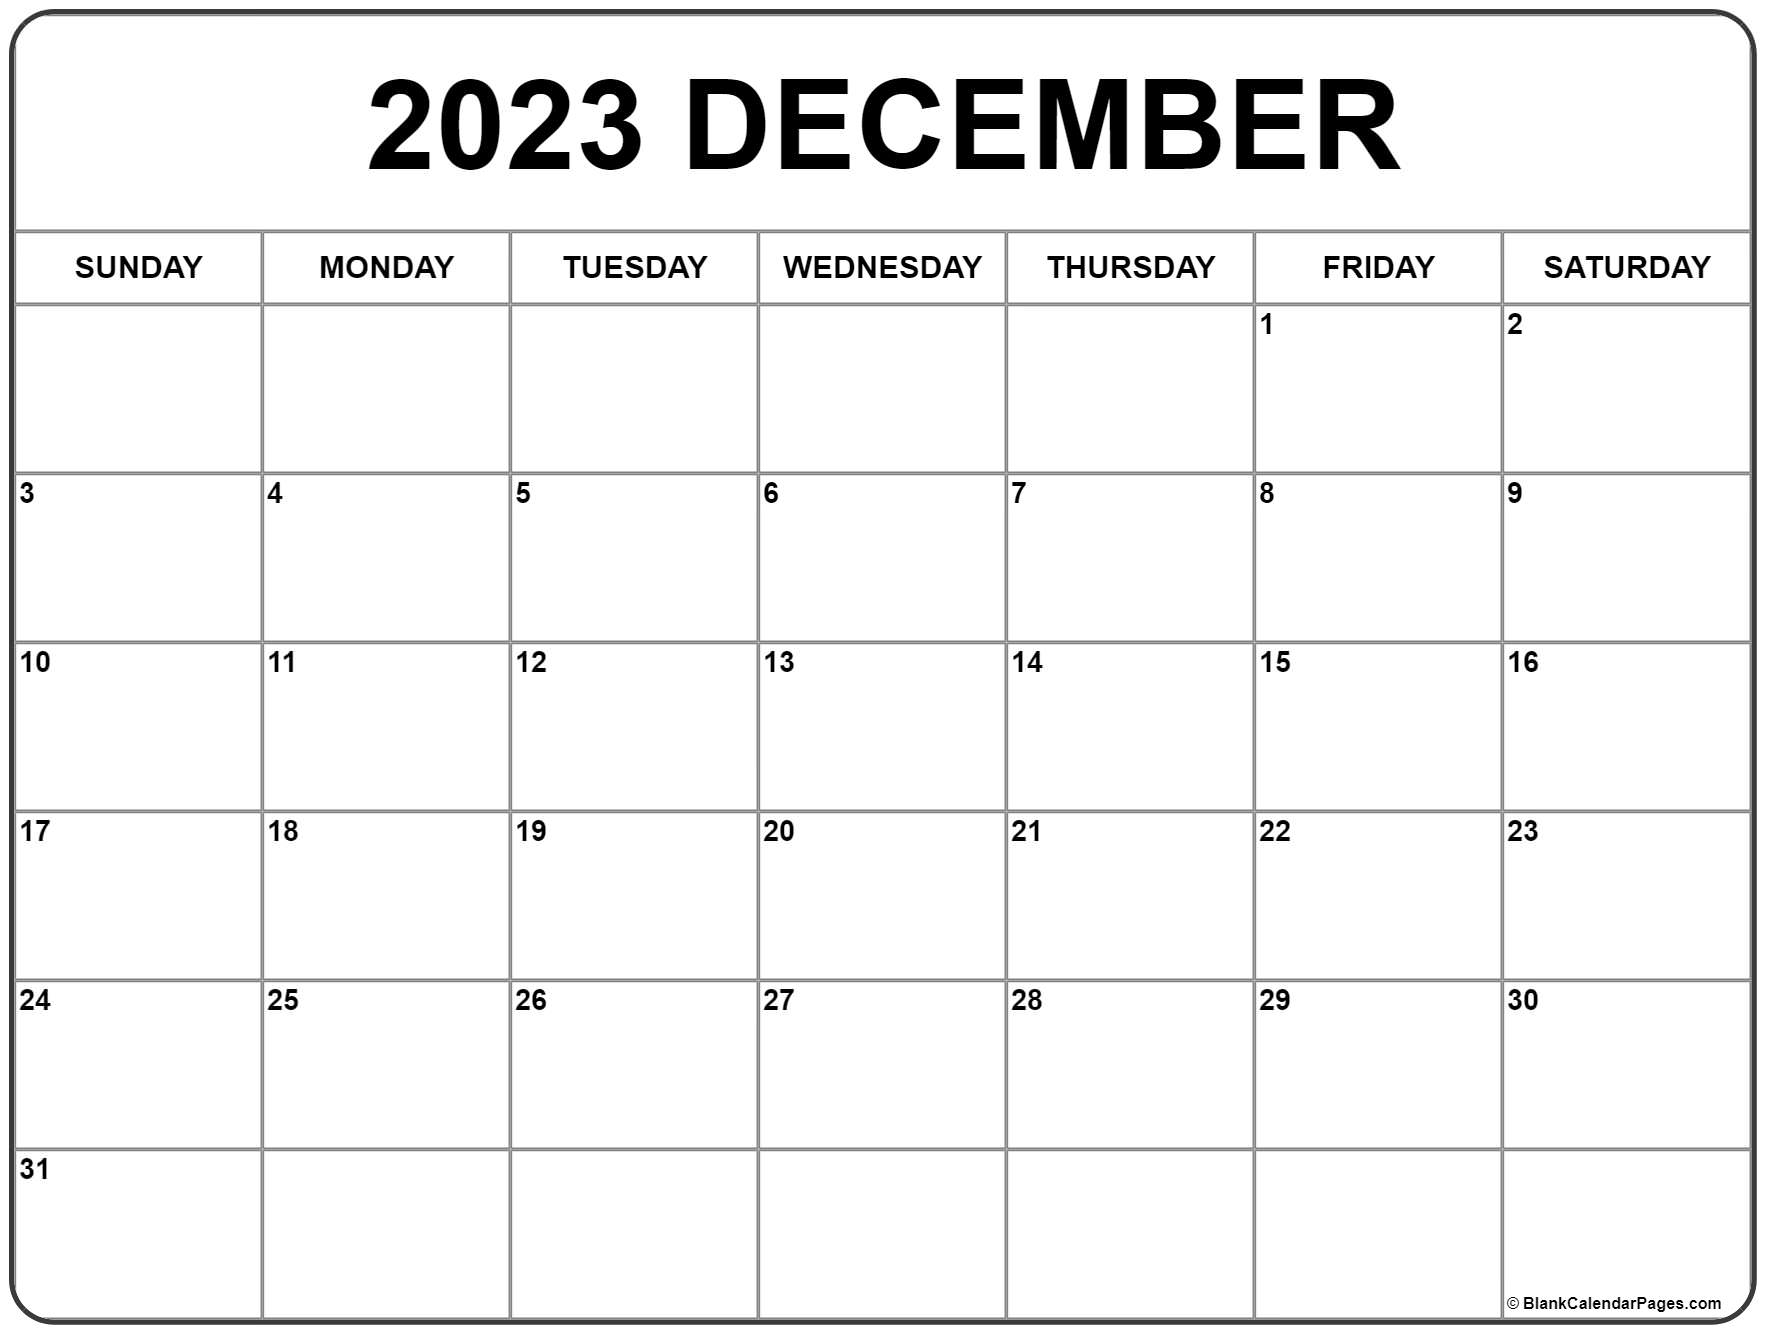 december-2023-with-holidays-calendar